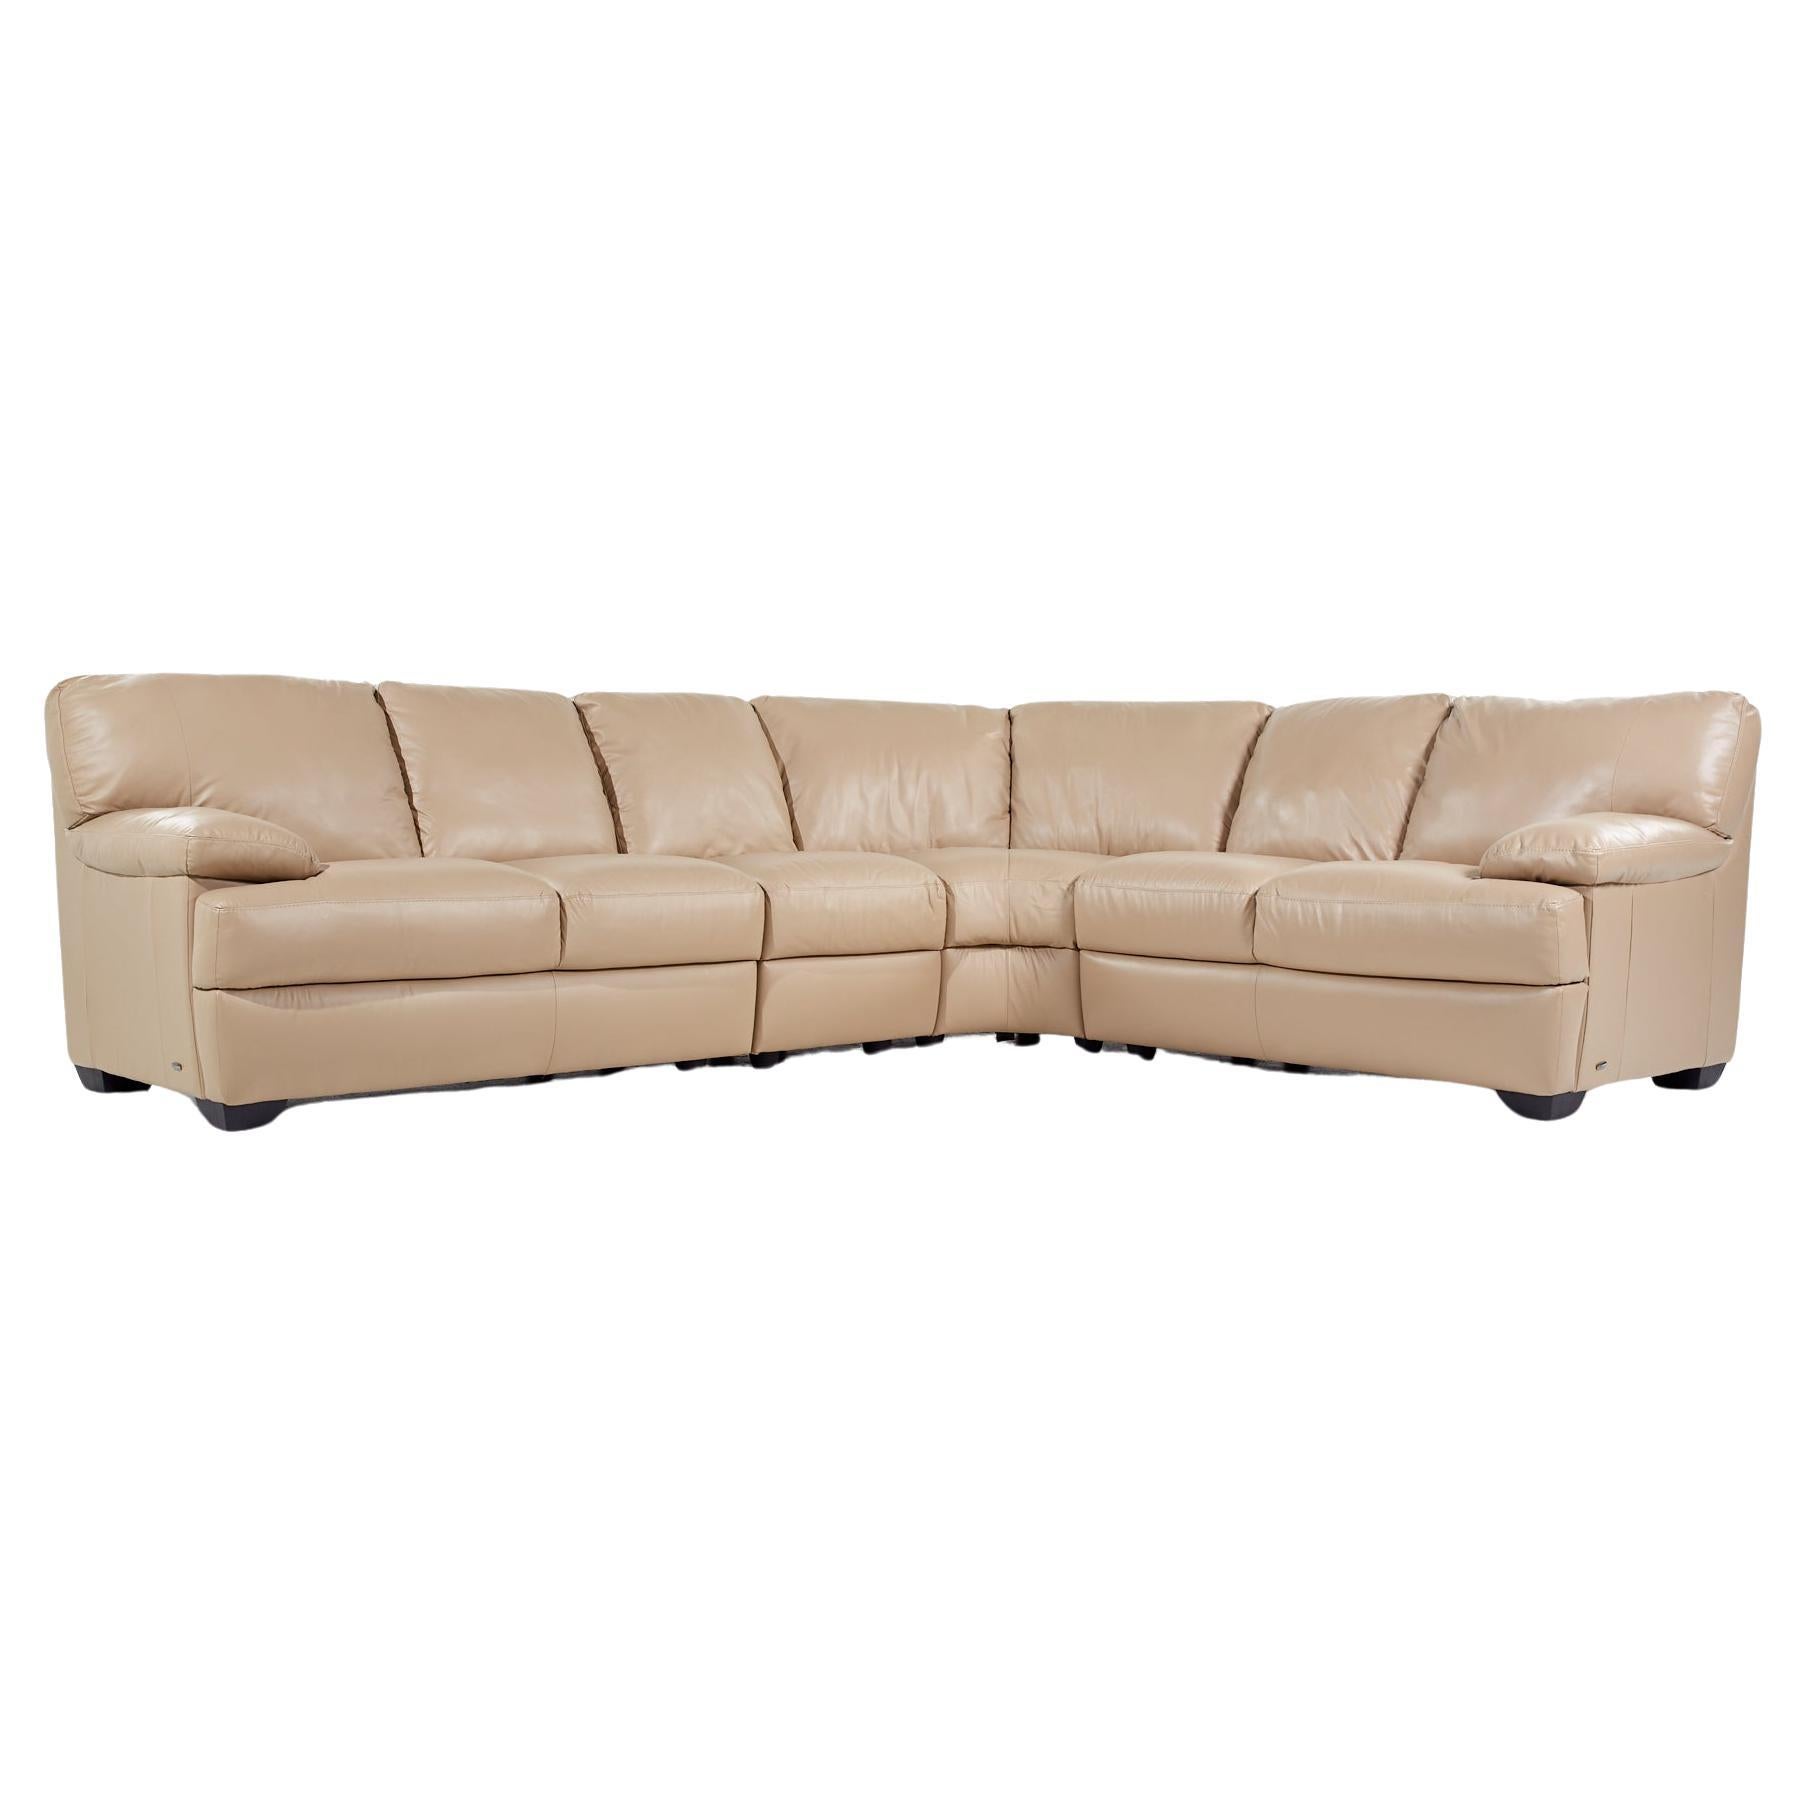 Natuzzi Leather Sectional Sofa For Sale